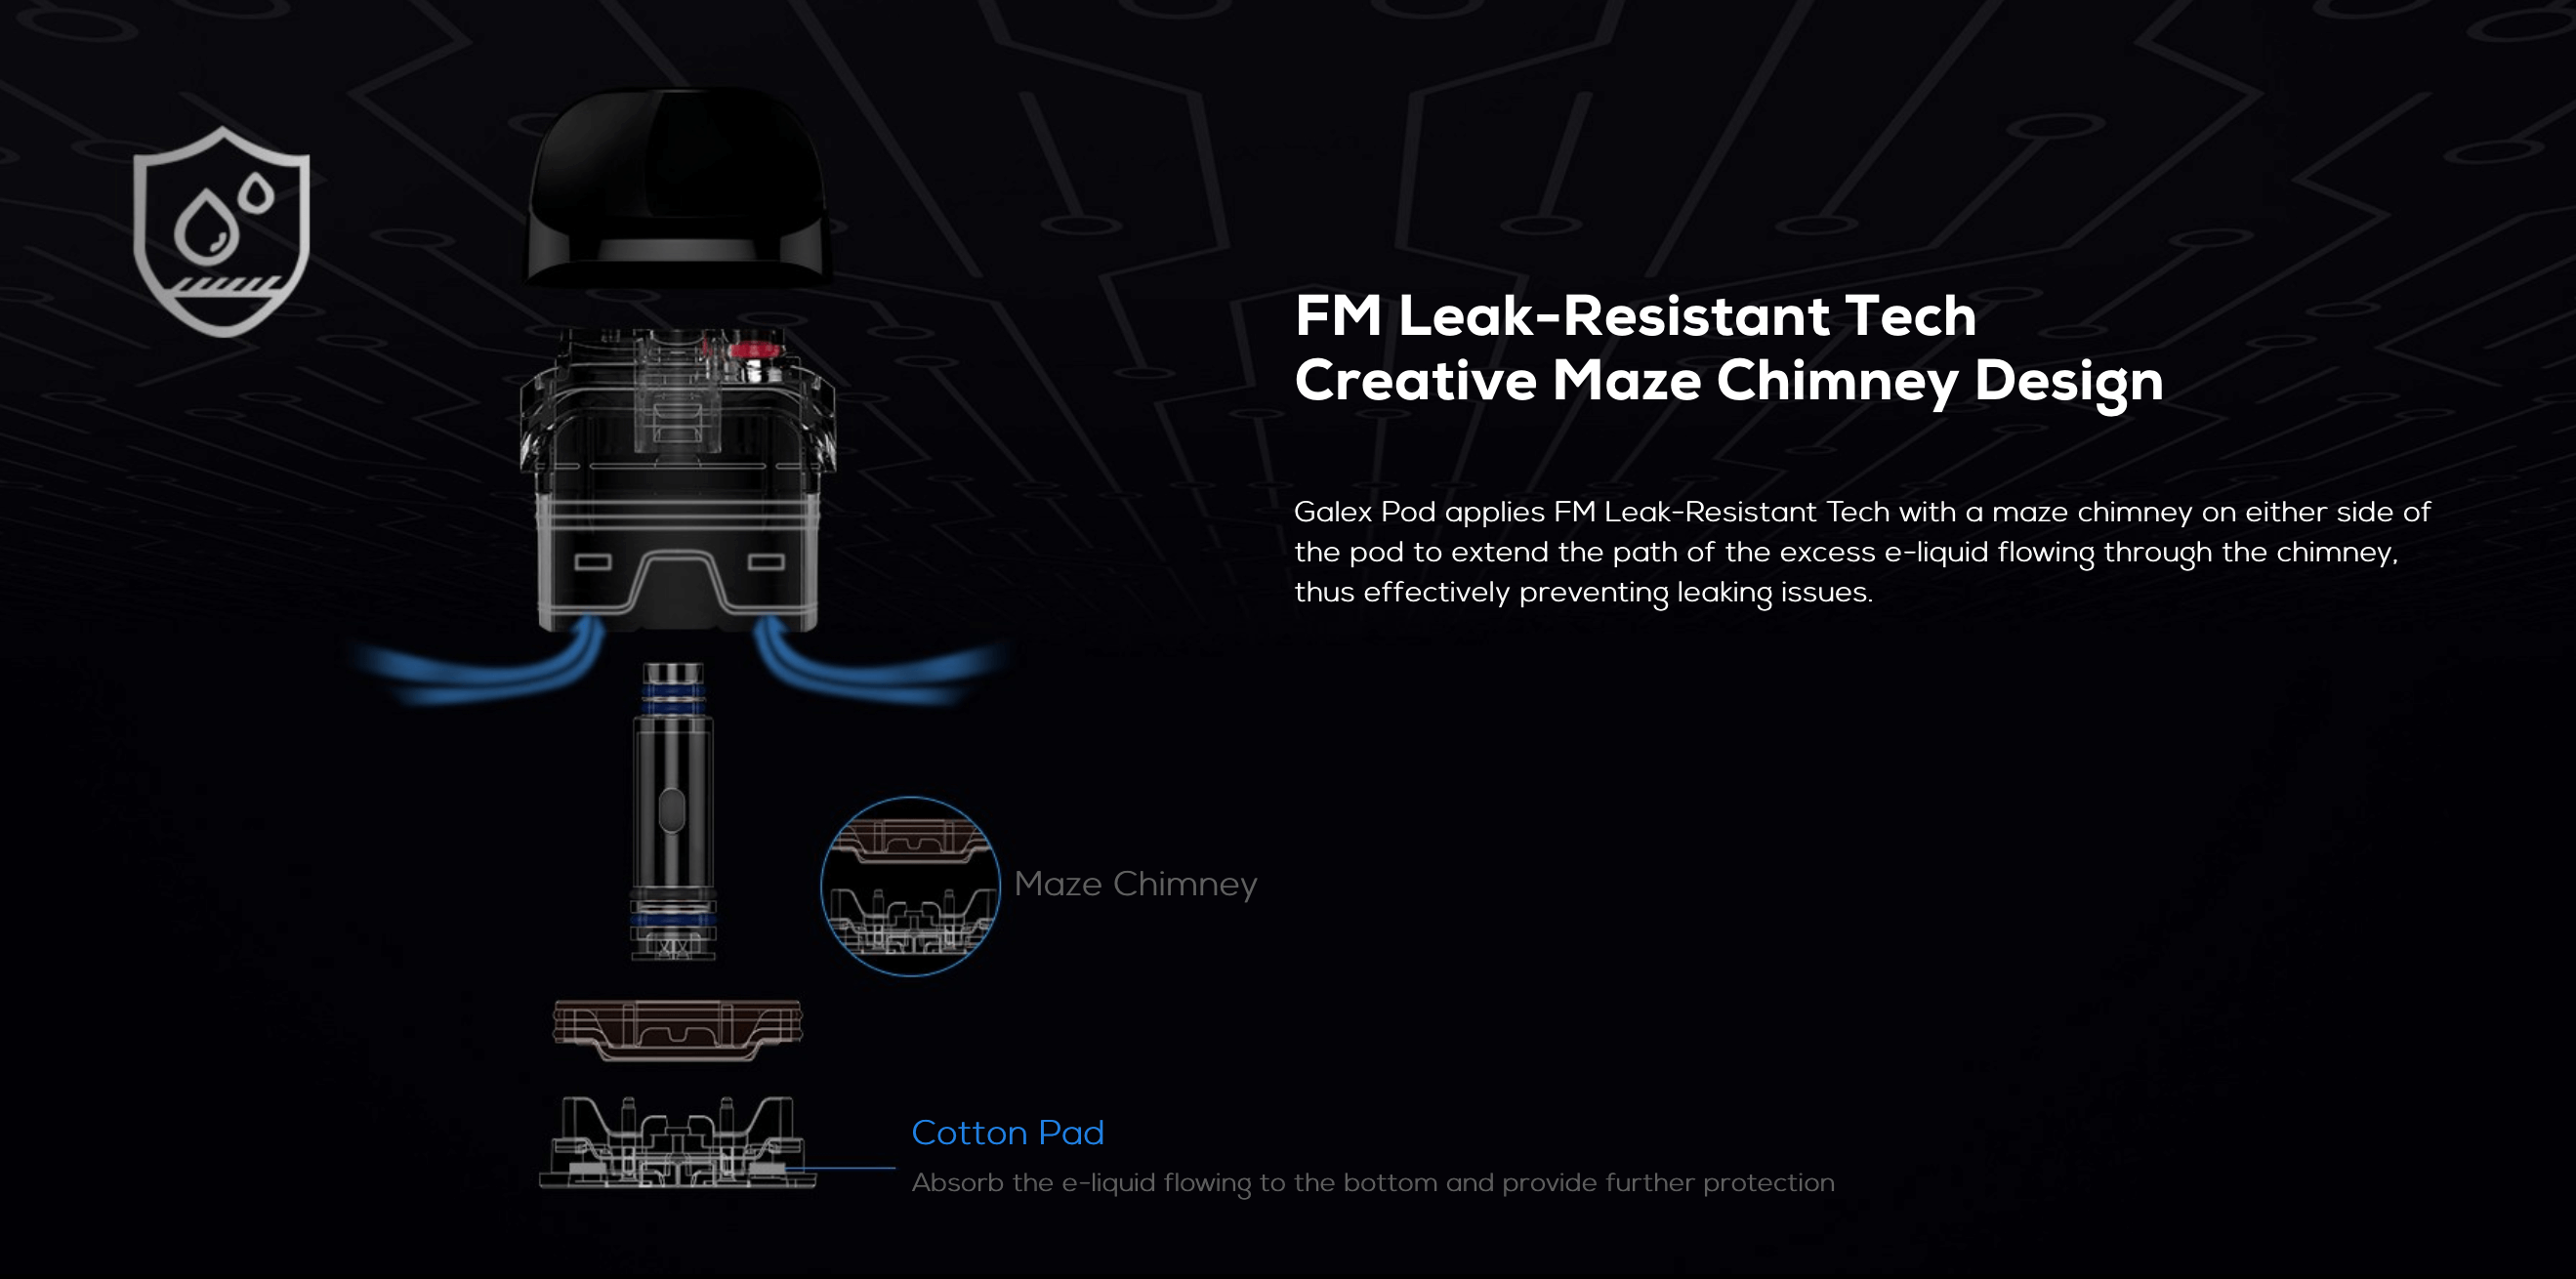 Freemax Galex Pro Kit - FM leak resistant tech, creative maze chimney design